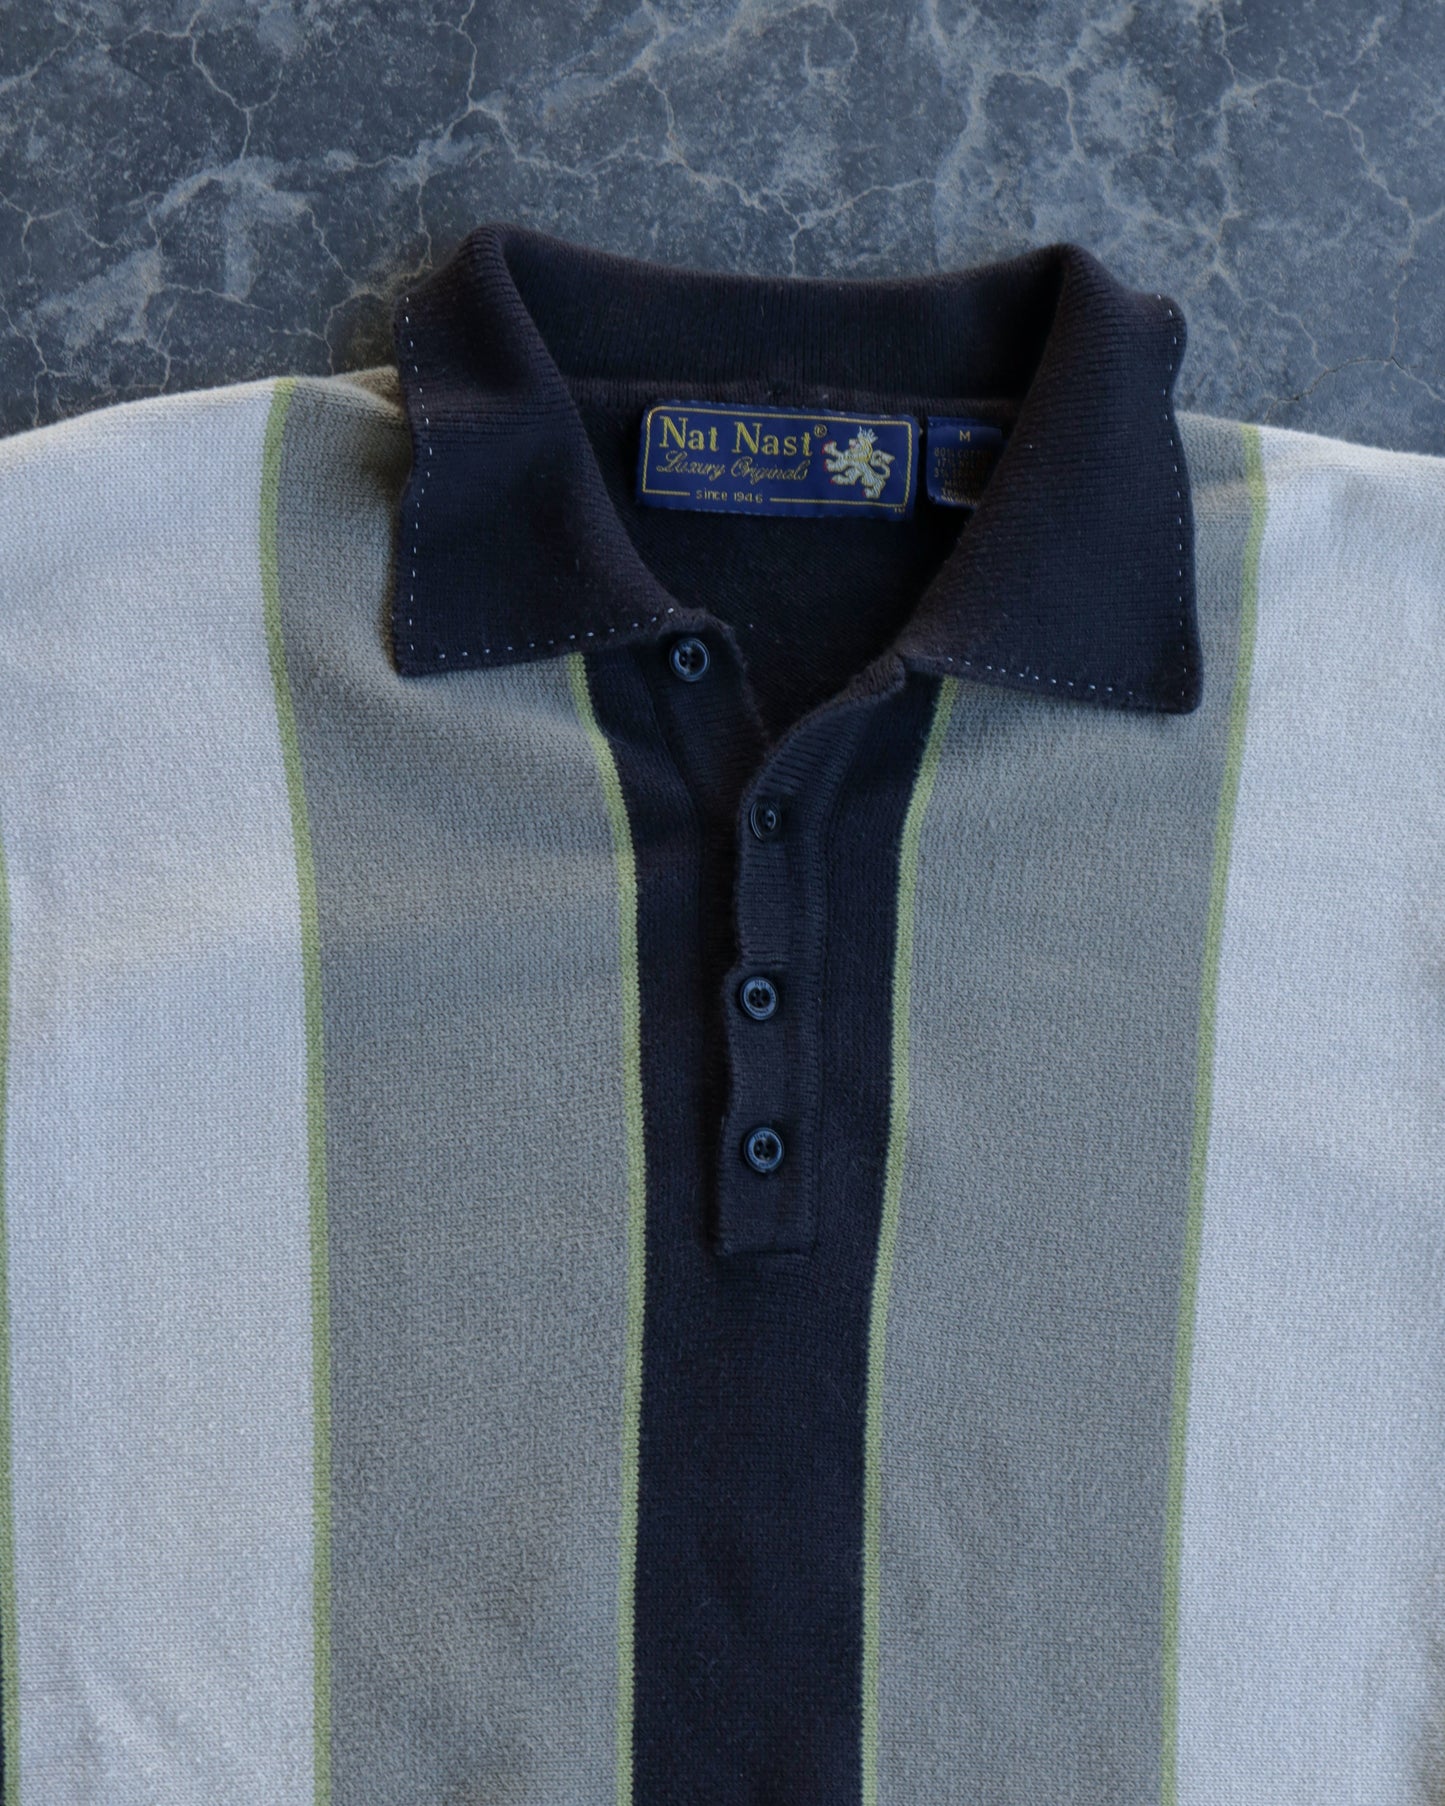 90s Nat Nast Long Sleeve Shirt - L